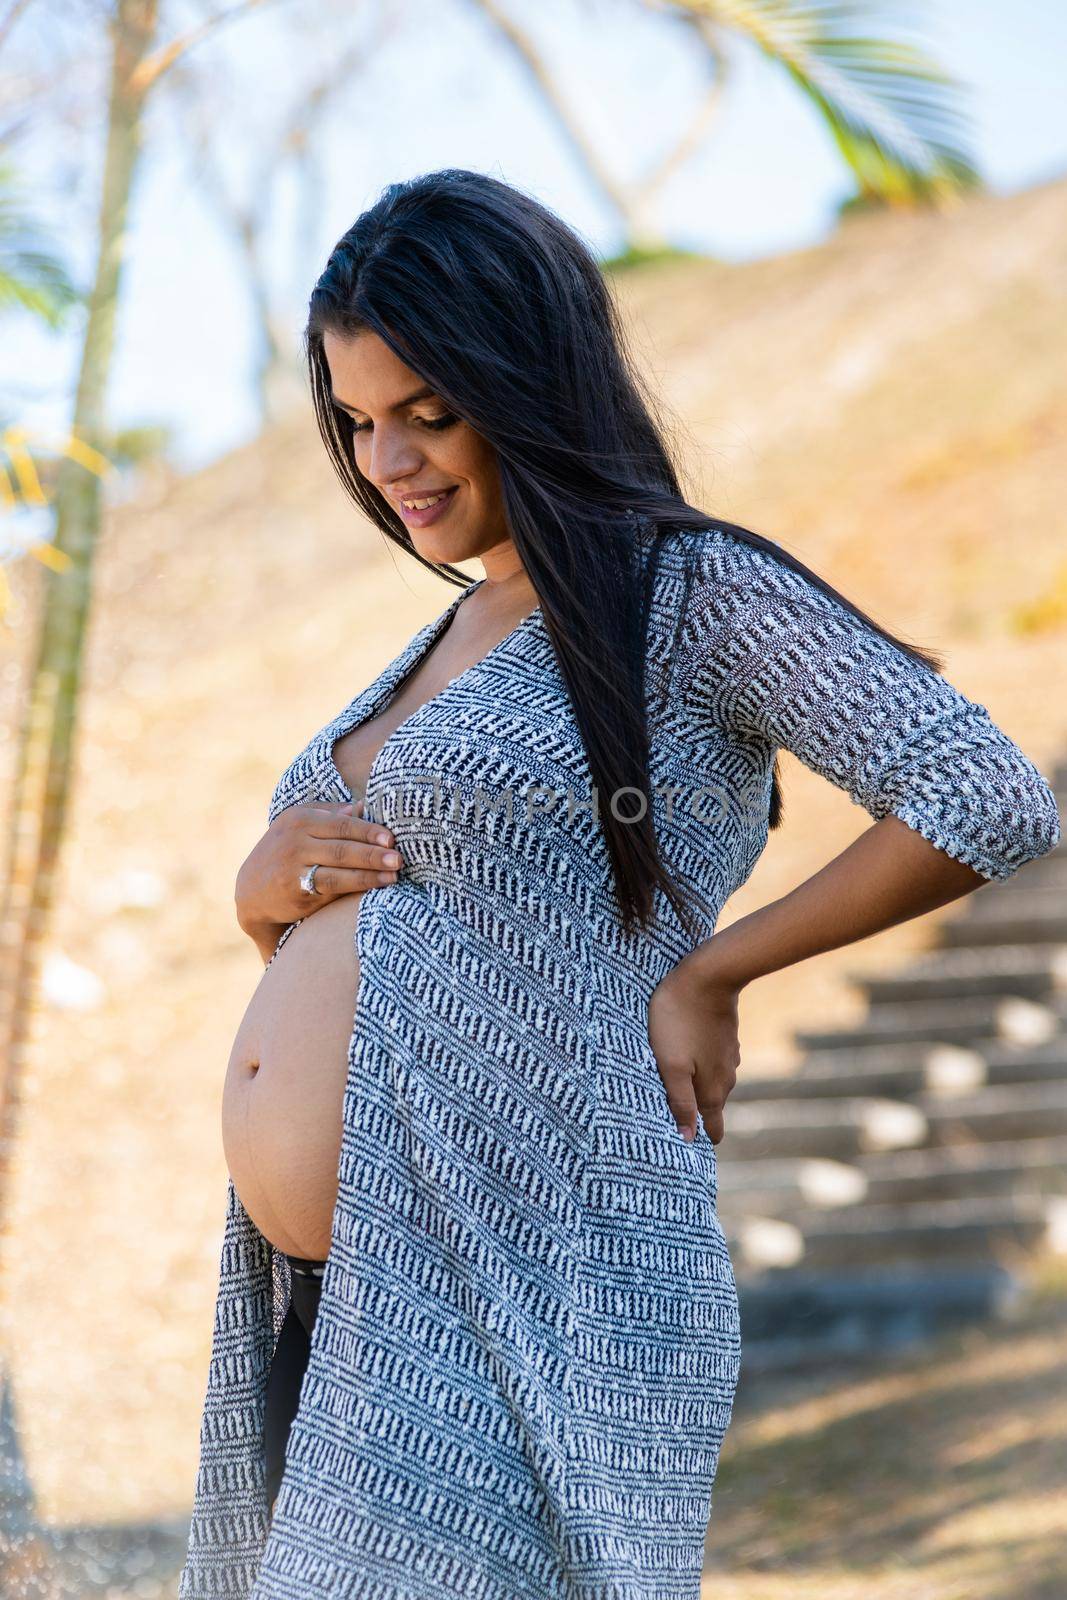 Pregnant woman by jrivalta